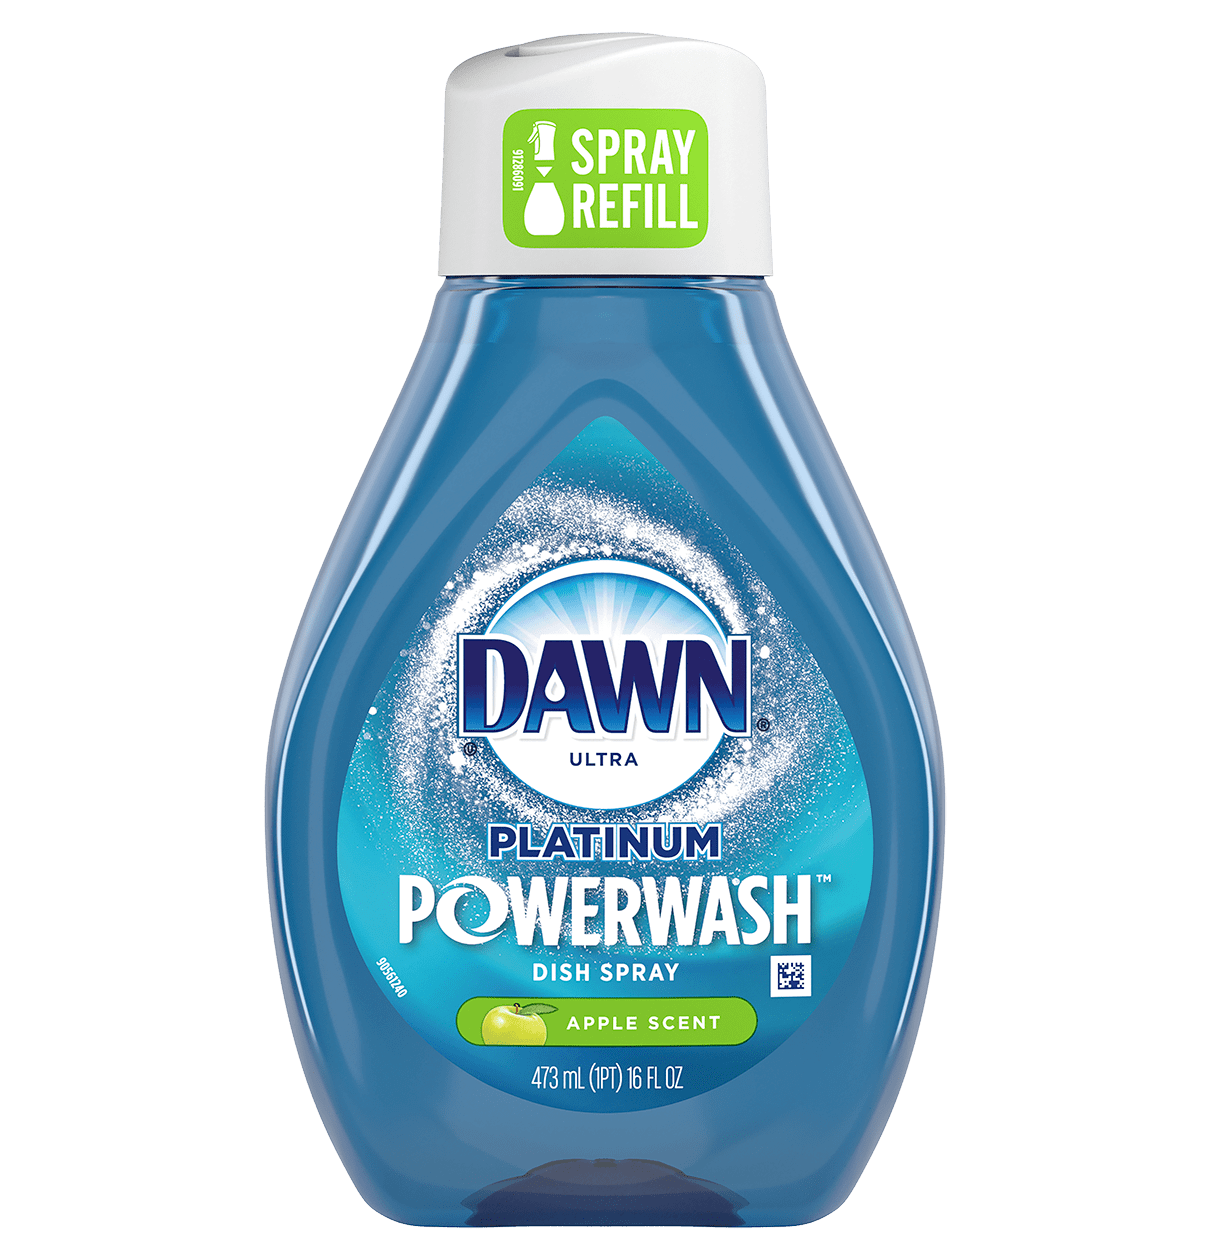 Dawn Platinum Powerwash Dish Spray Refill, Apple Scent